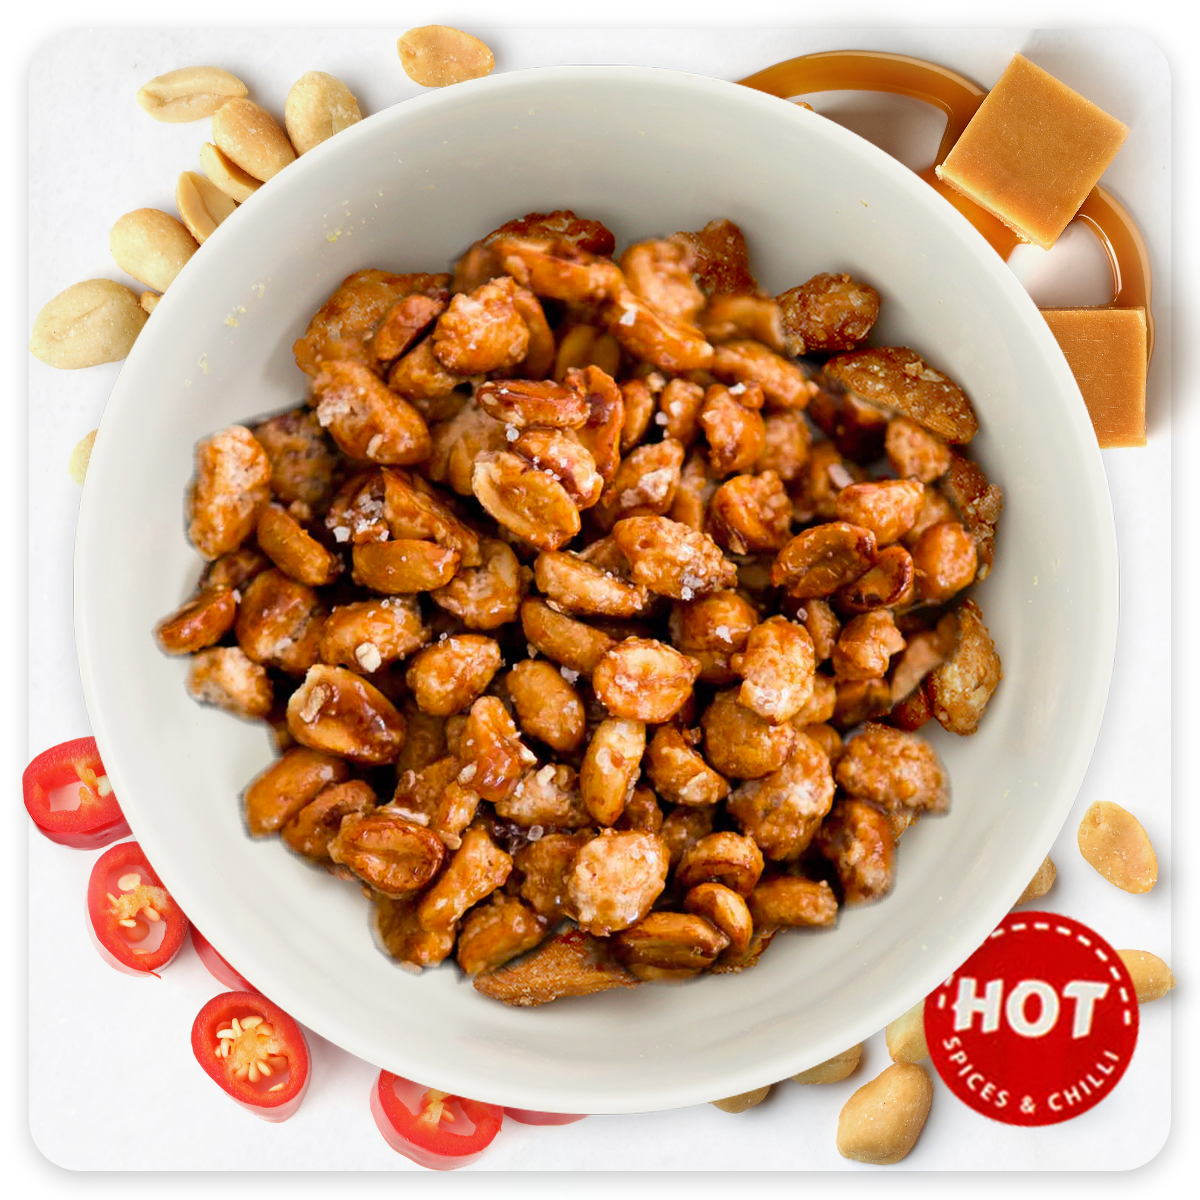 Peanuts Caramel Coated - Hot & Spicy